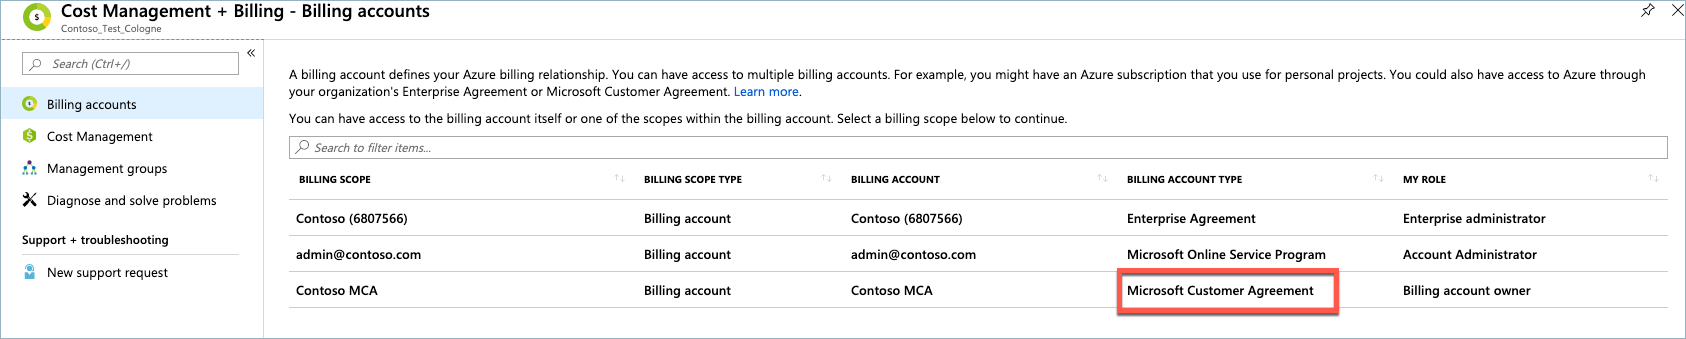 Contrato de Cliente da Microsoft, Tipo de Conta de Cobrança, lista de conta de cobrança, portal do Microsoft Azure